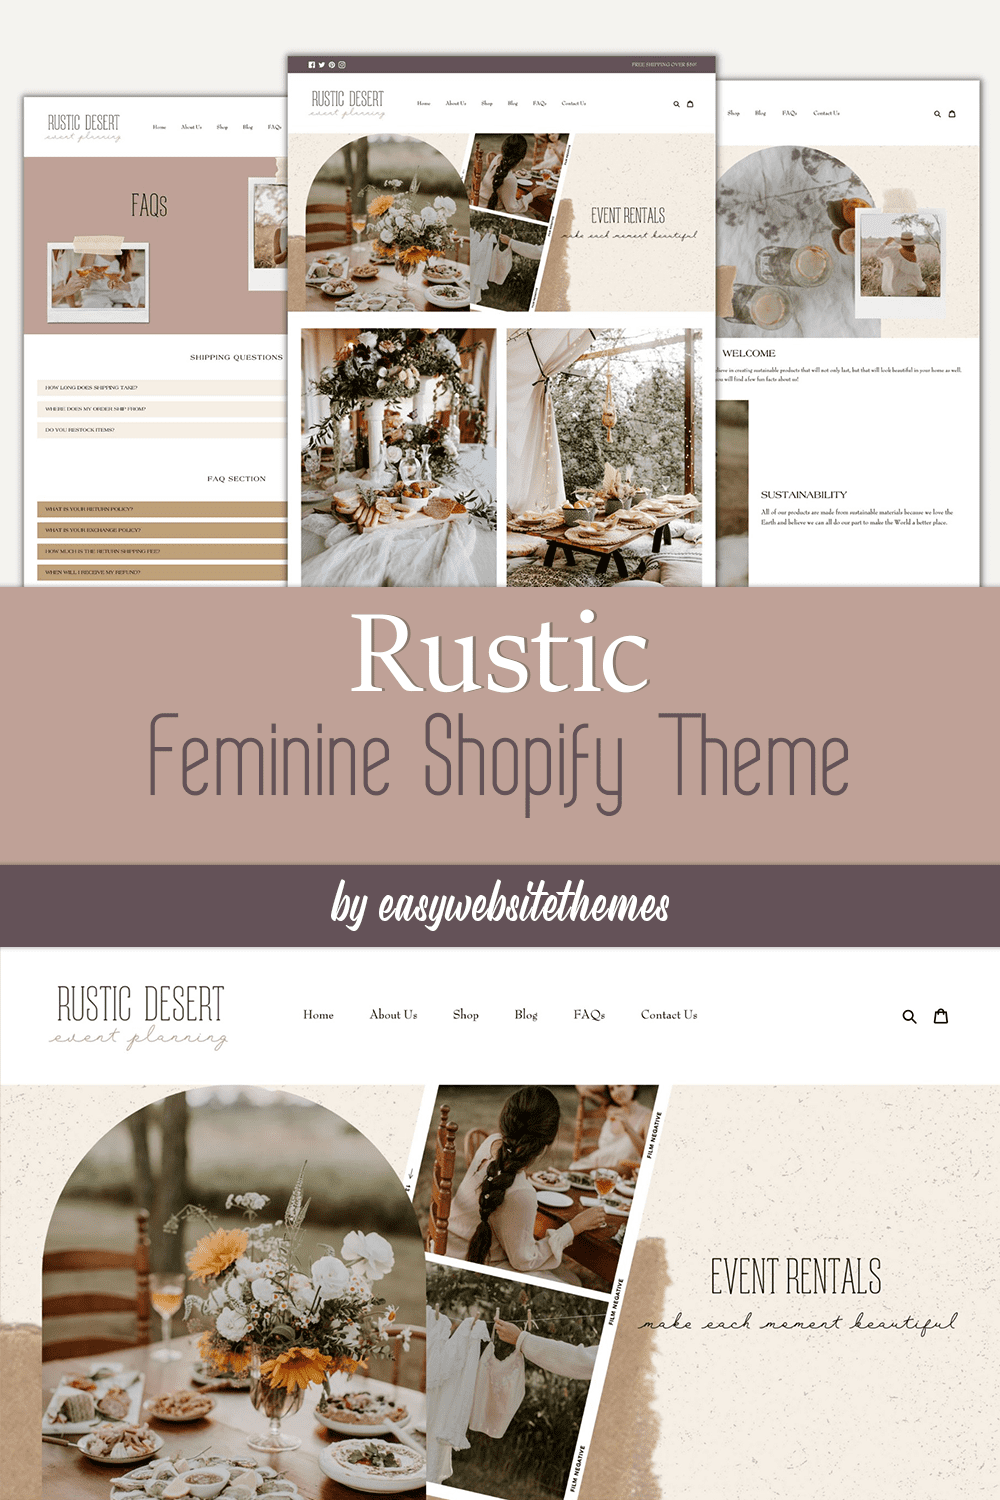 Rustic deserts of feminine shopify theme.